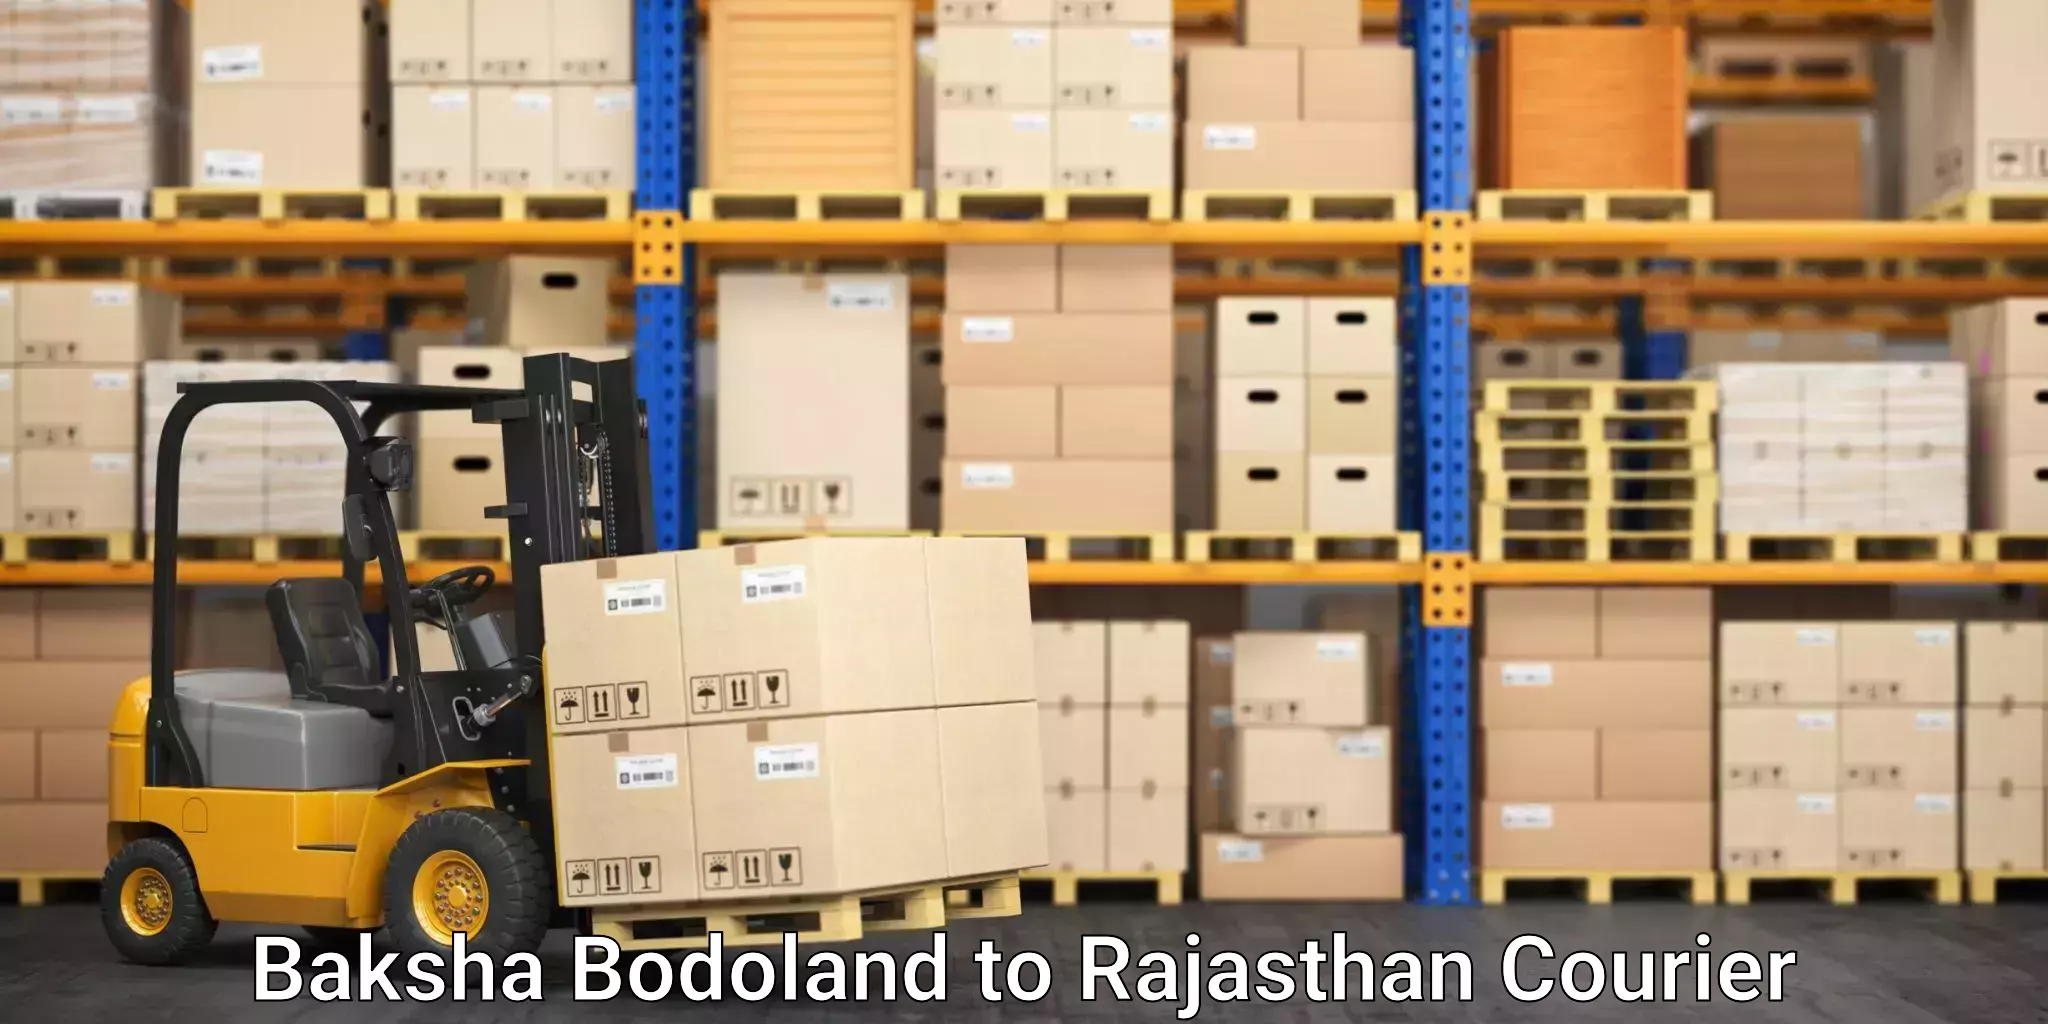 Bulk shipping discounts Baksha Bodoland to Pokhran